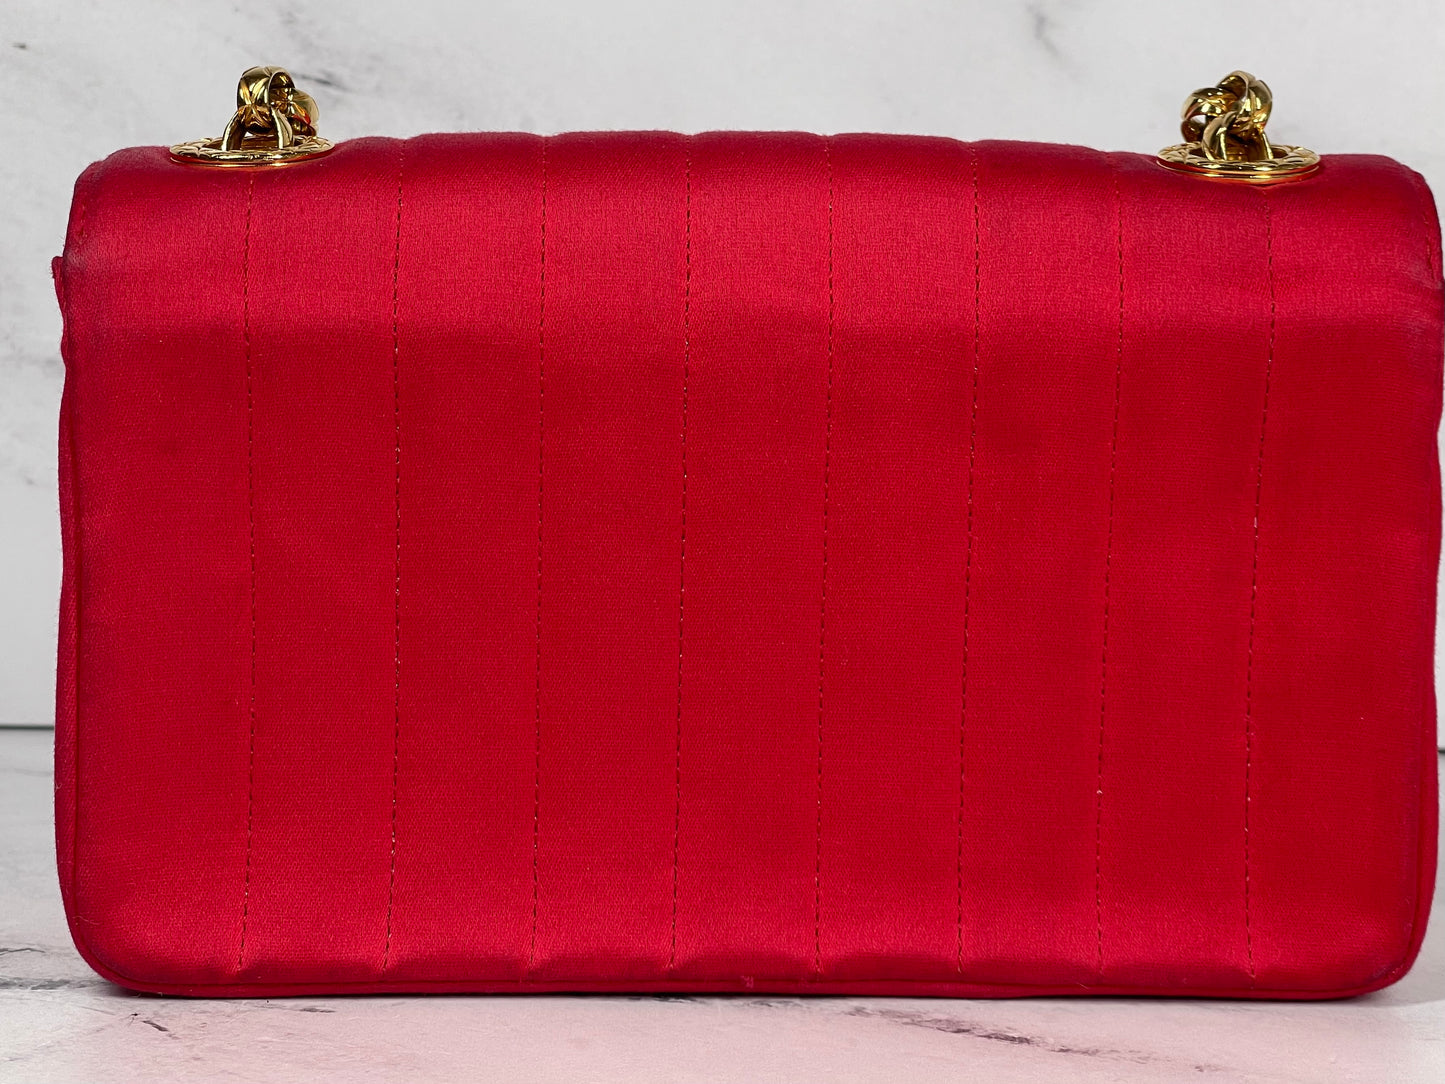 Chanel Vintage 2 Series Red Satin Classic Mini Flap Bag w Bijoux Chain w 24K GPHW